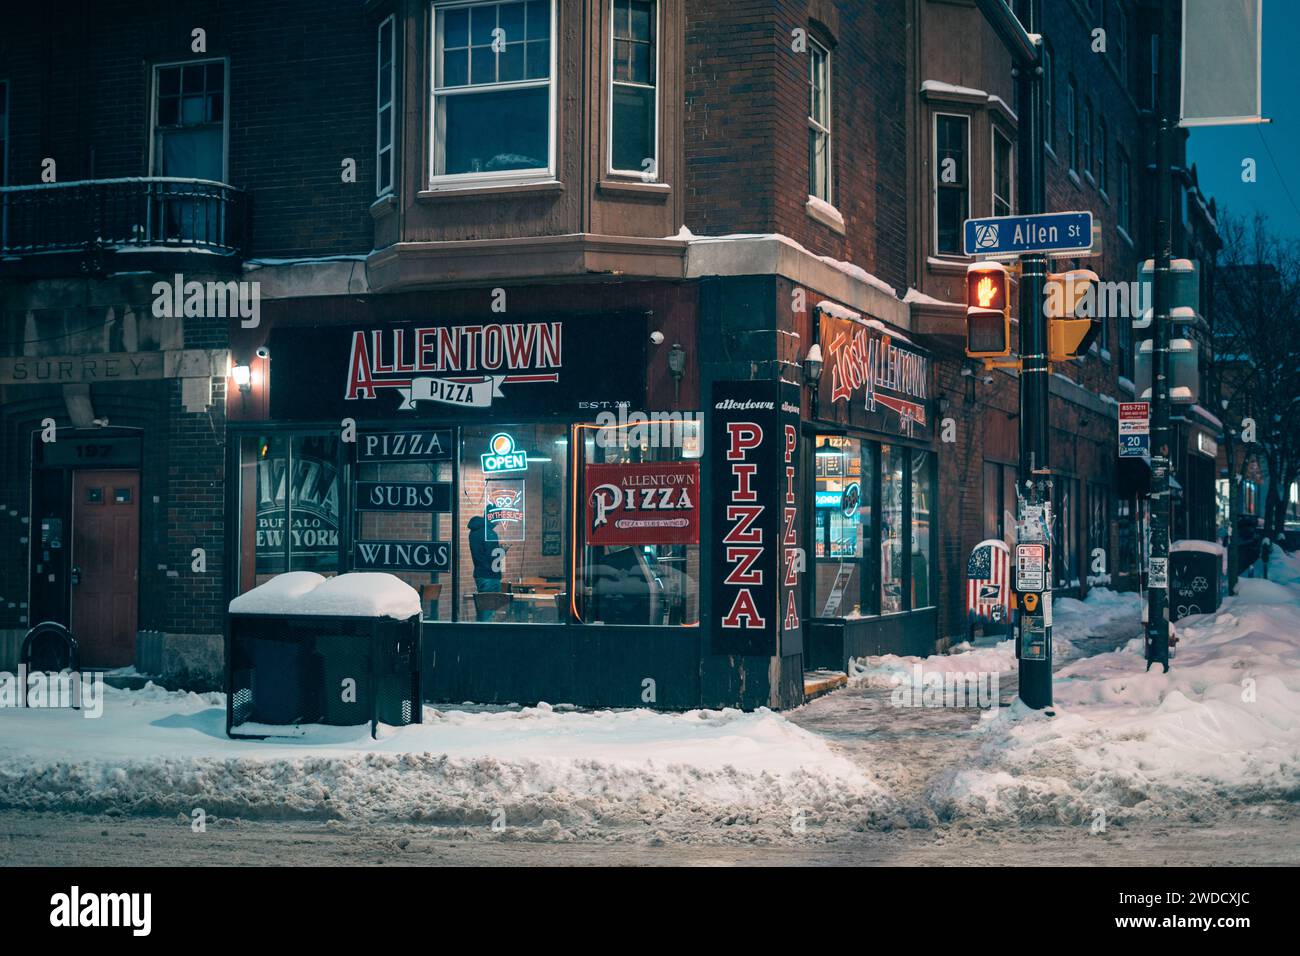 Allentown Pizza on a snowy winter night, Buffalo, New York Stock Photo